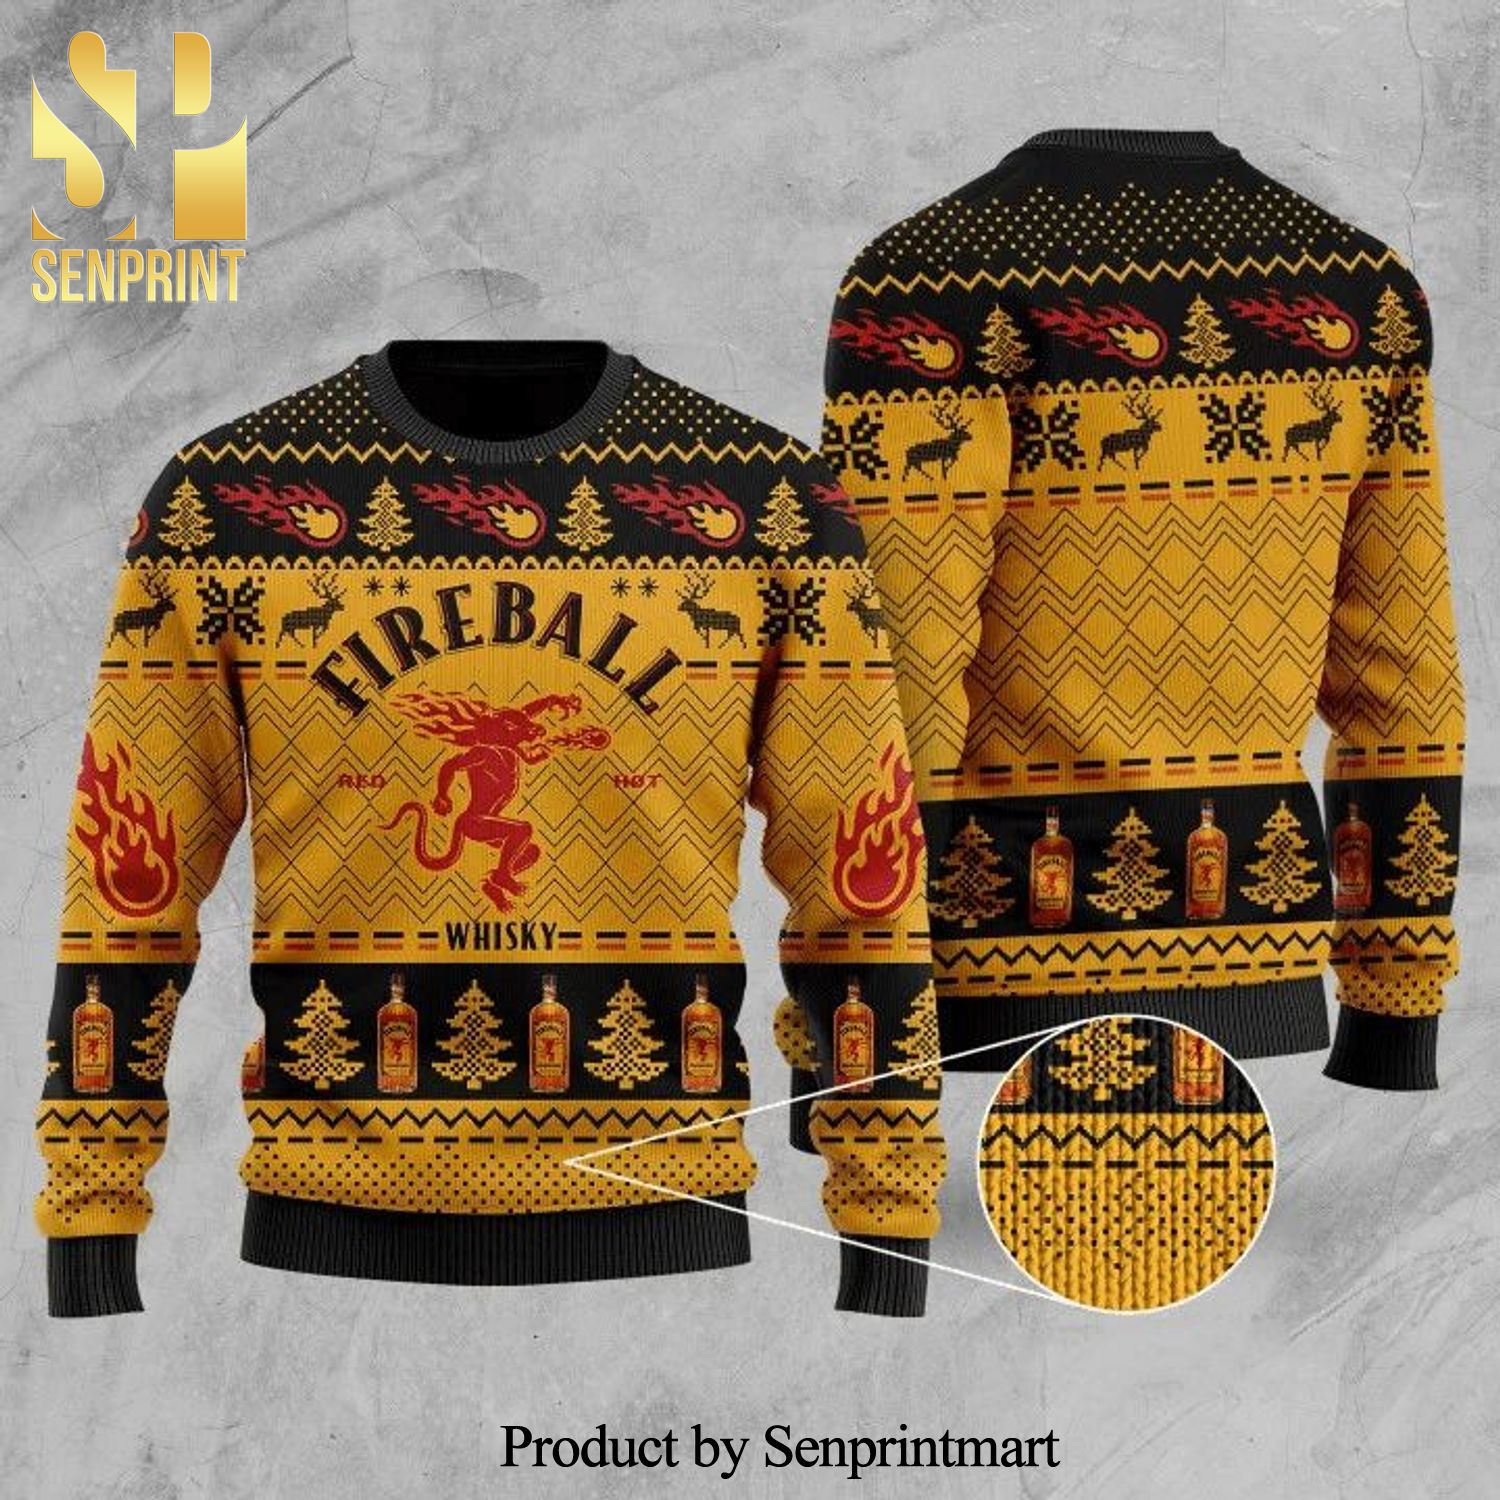 Fireball Cinnamon Whisky Knitted Ugly Christmas Sweater – Yellow